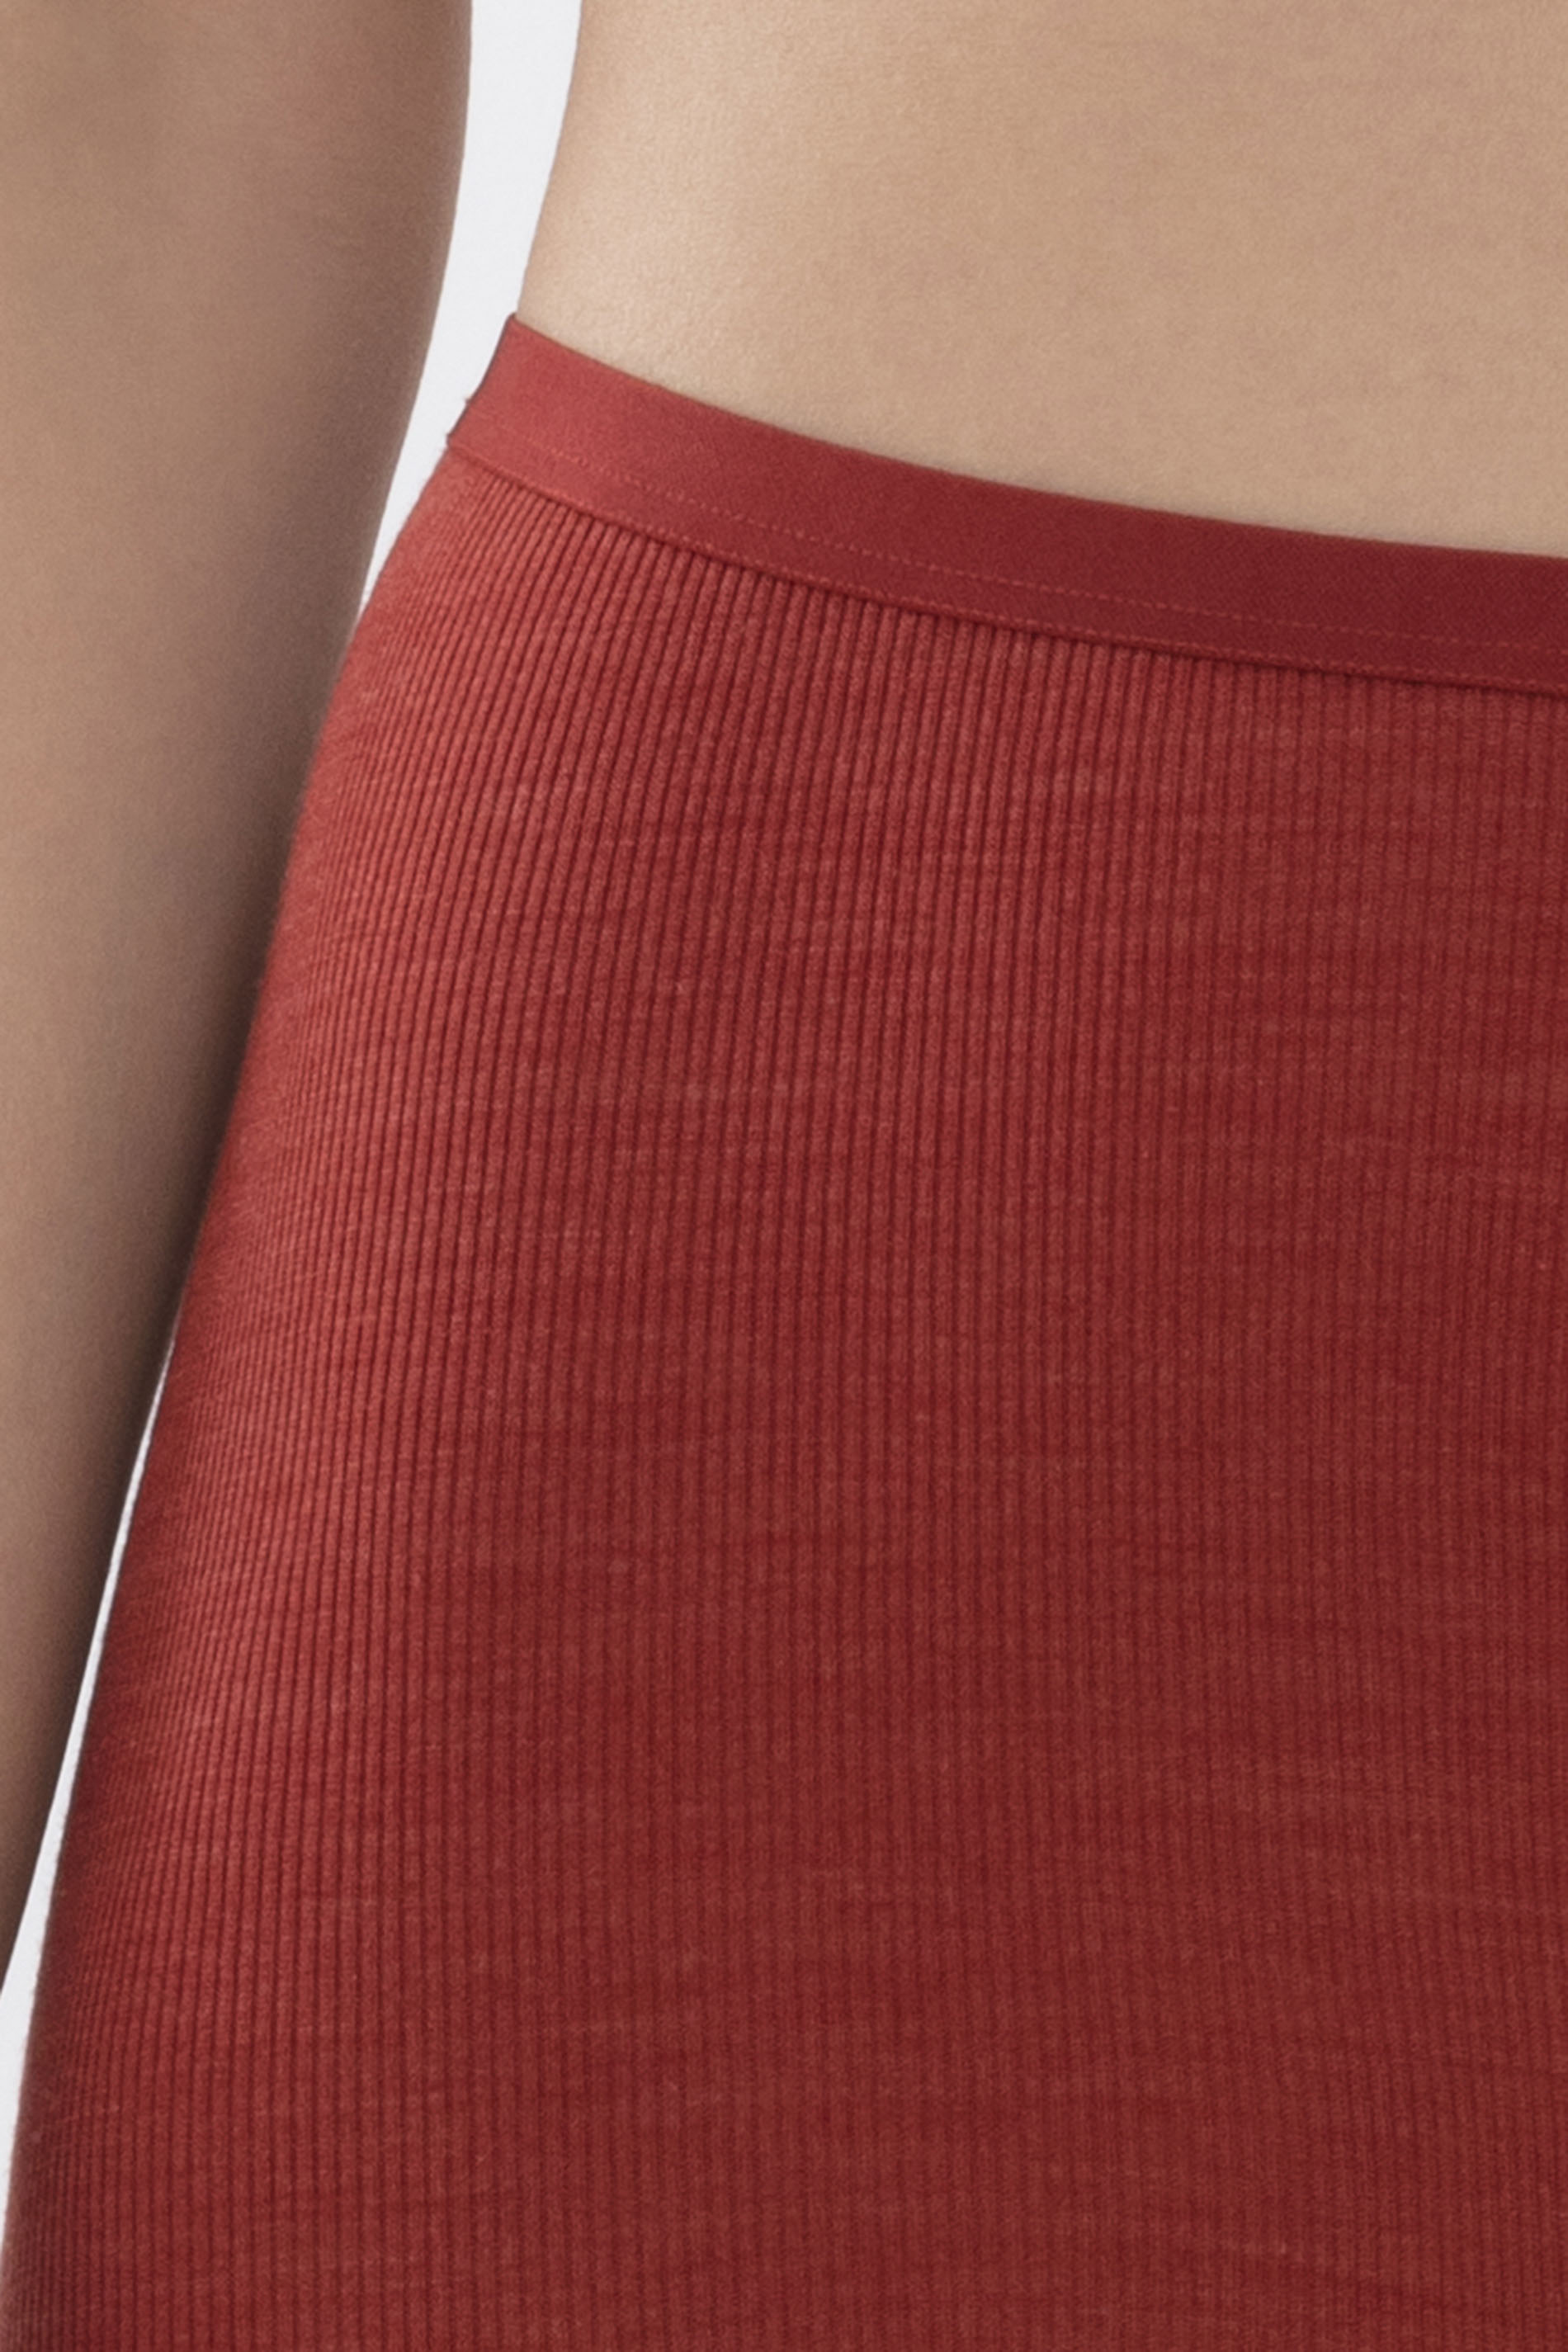 Leggings Red Pepper Serie Silk Rib Wool Detailansicht 01 | mey®